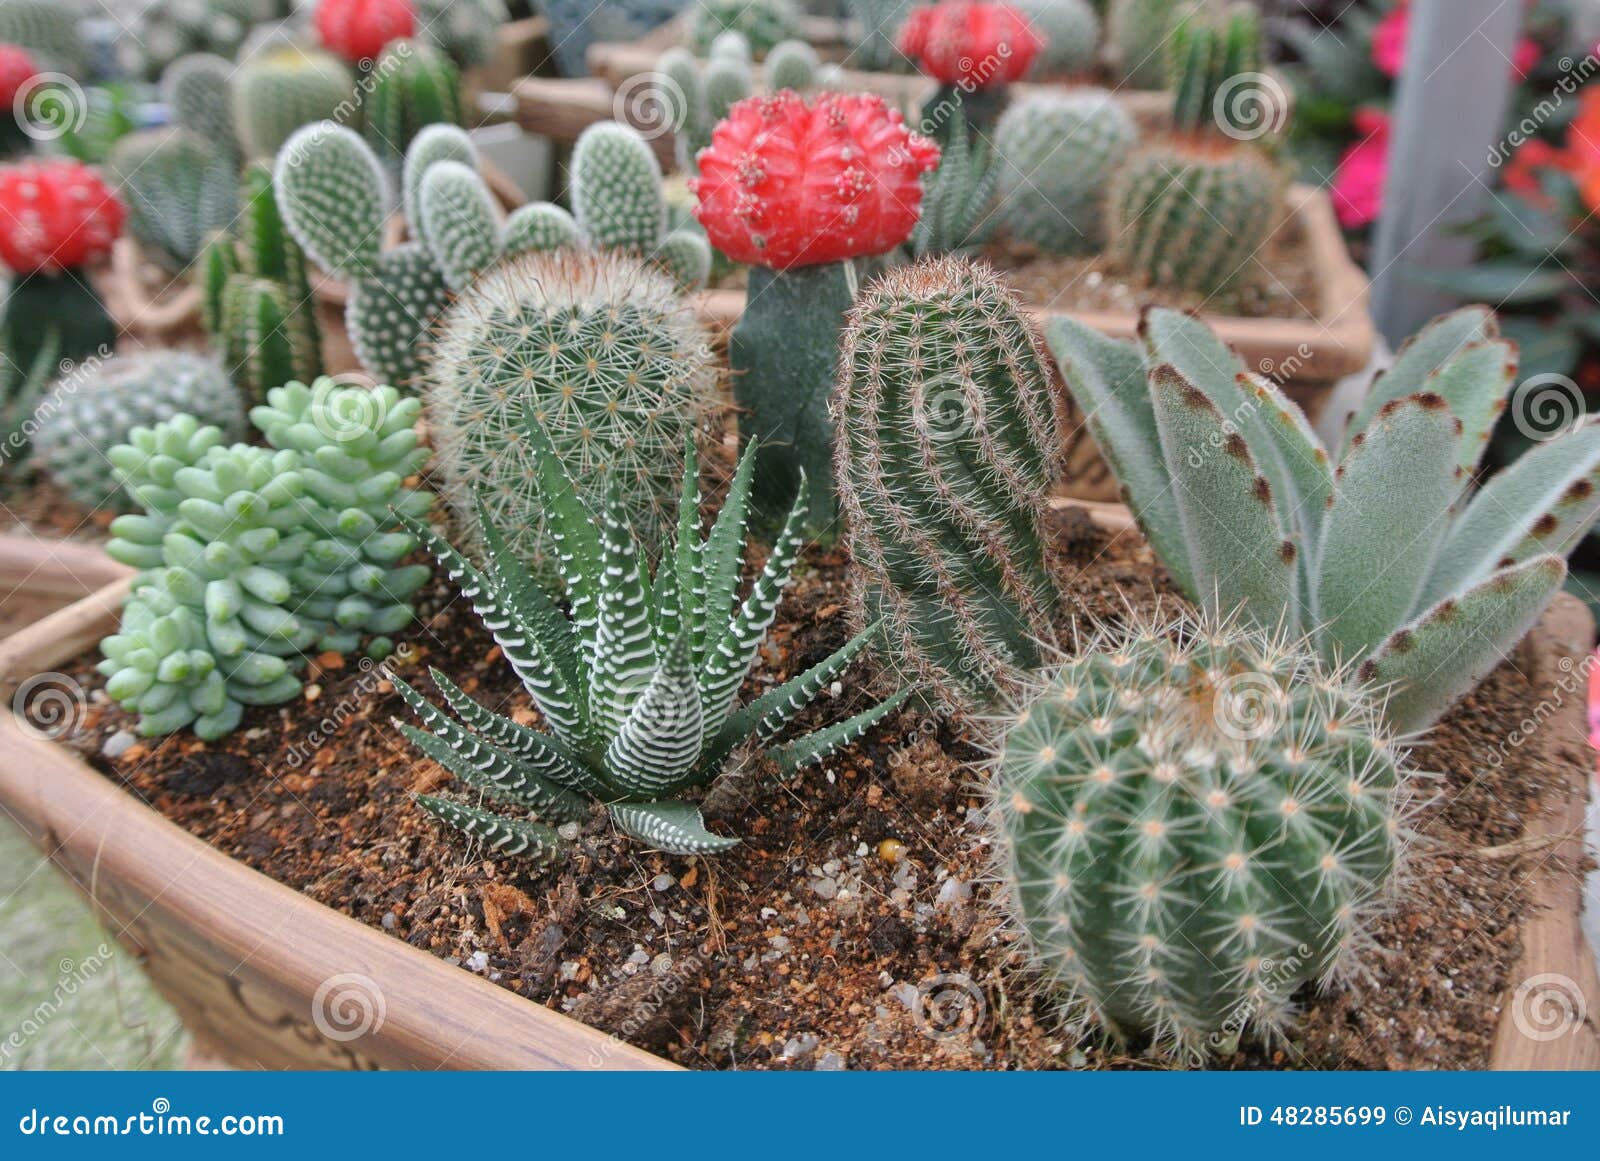 cactus-pot-cameron-highland-malaysia-â€“-december-plant-nurseries-one-famous-malaysian-48285699.jpg